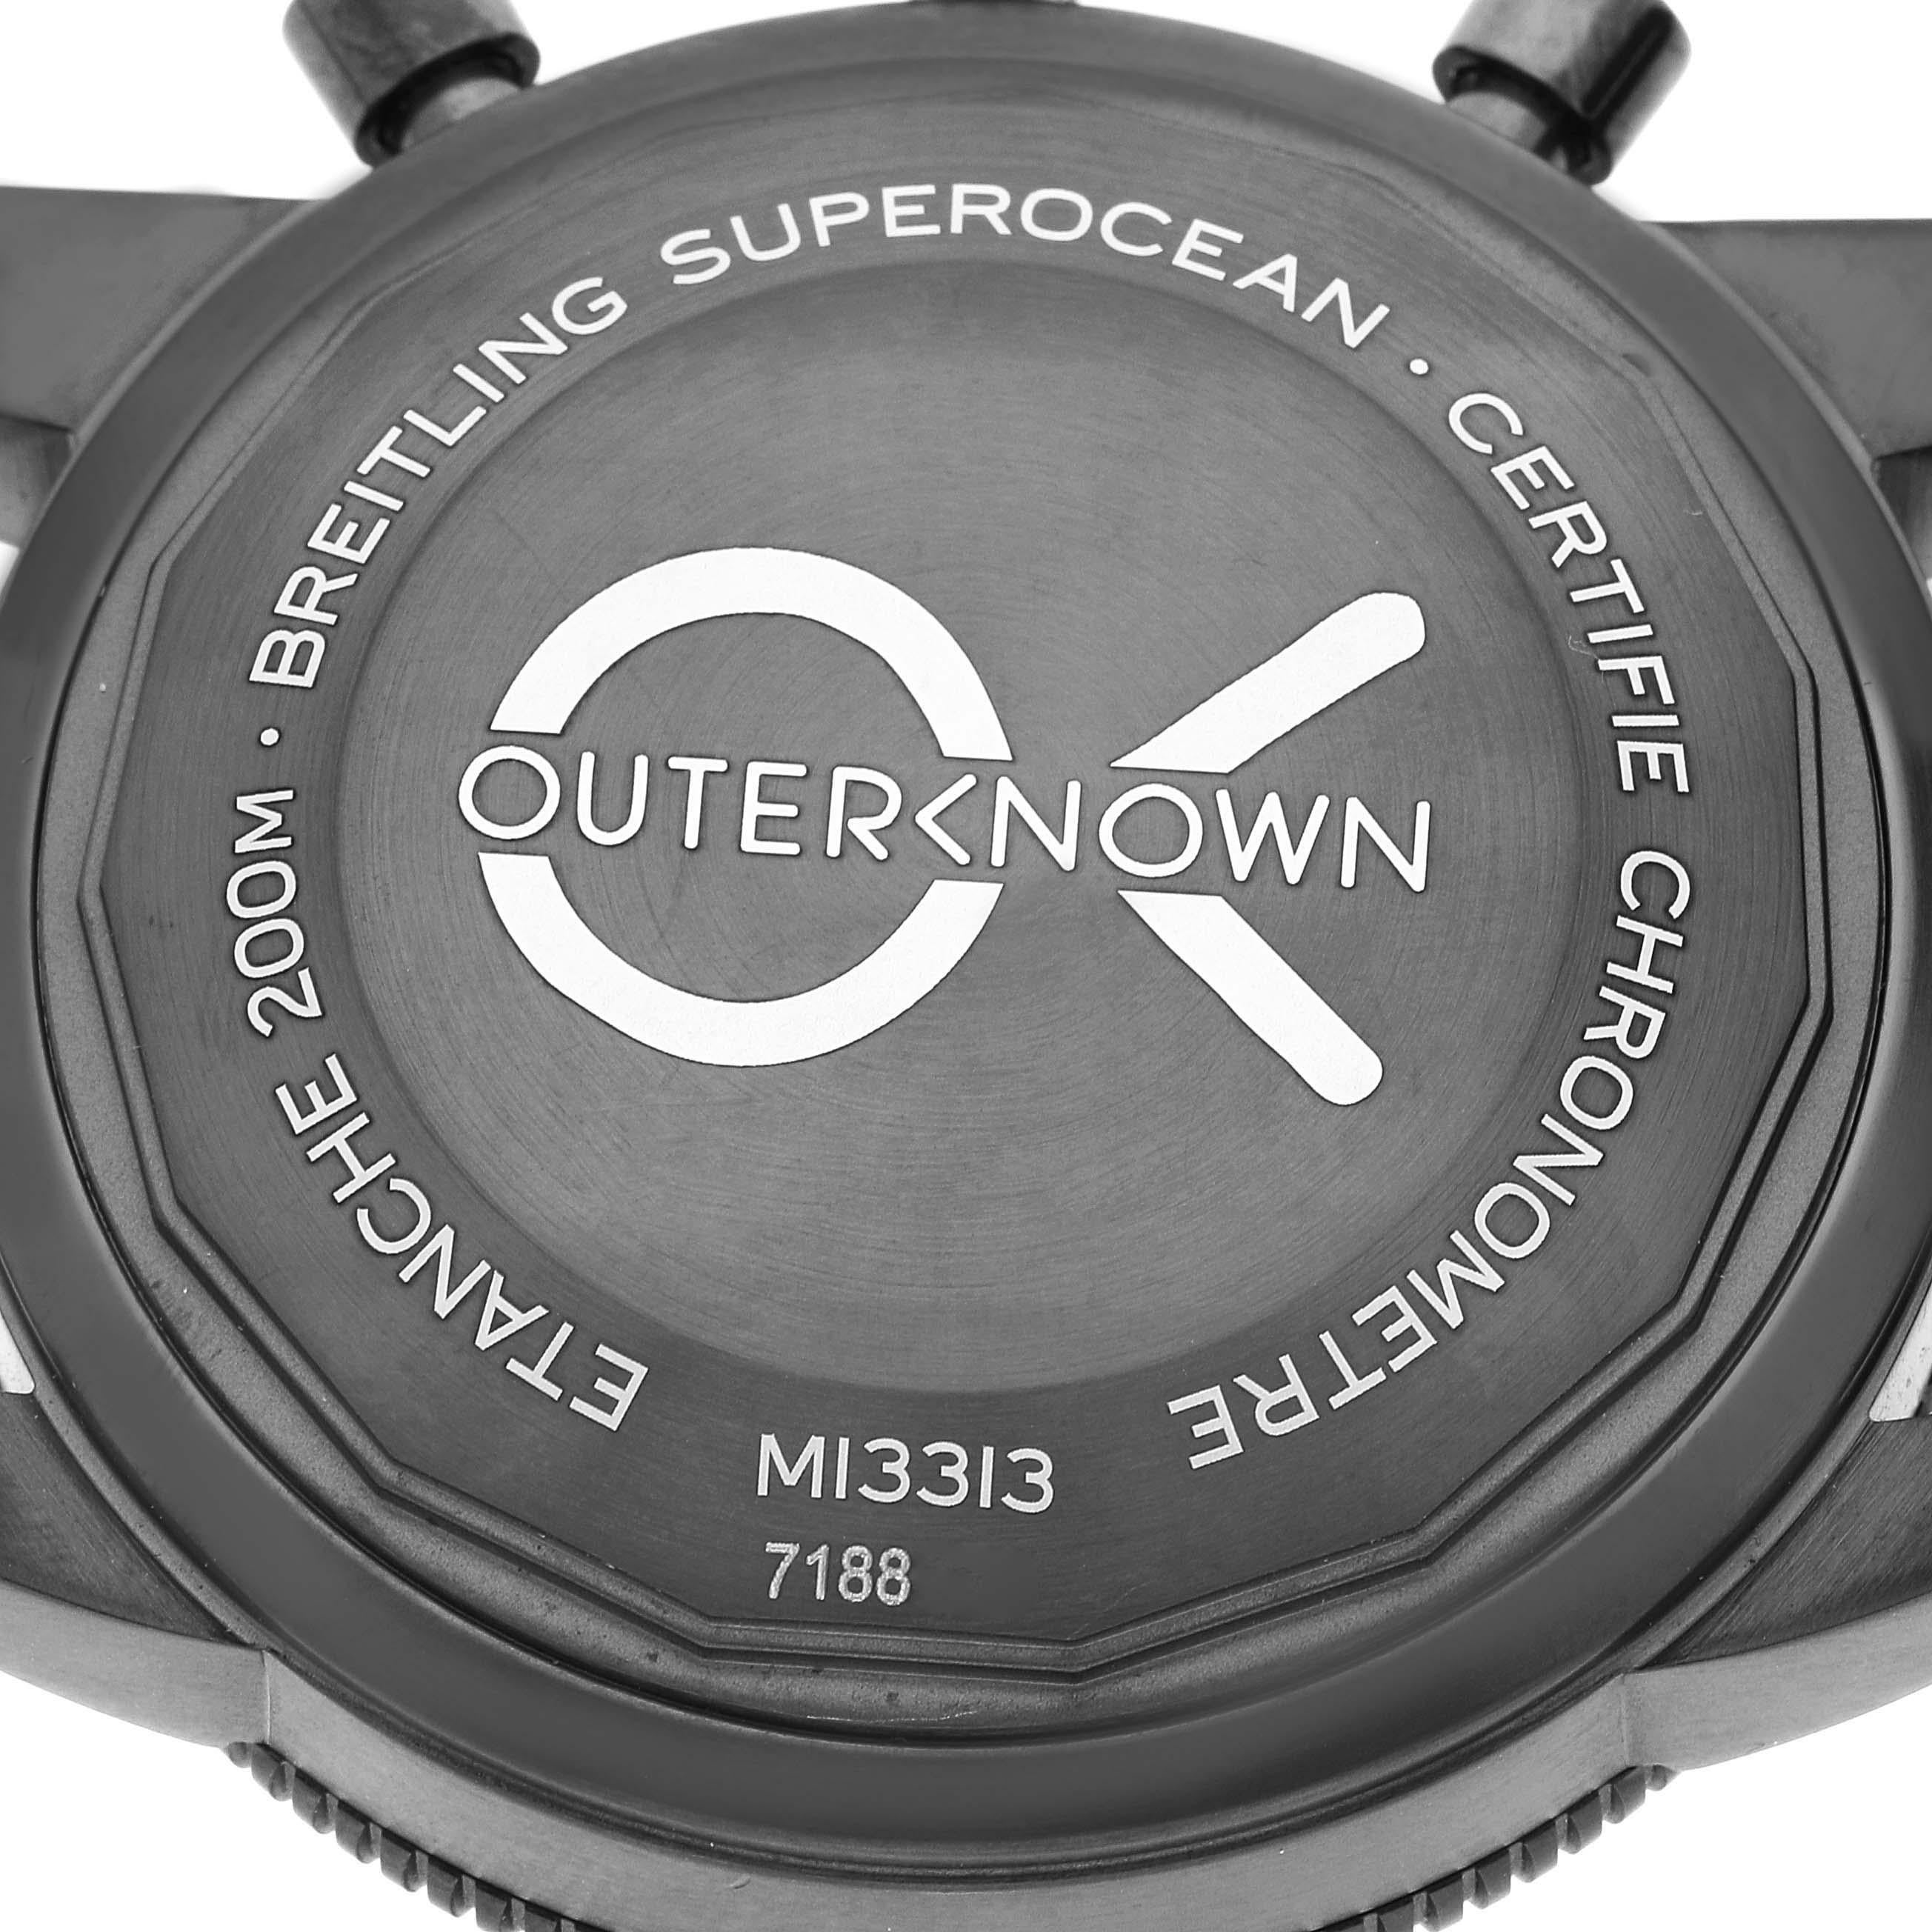 Breitling SuperOcean Heritage Chronograph DLC Steel Mens Watch M13313 Unworn For Sale 1